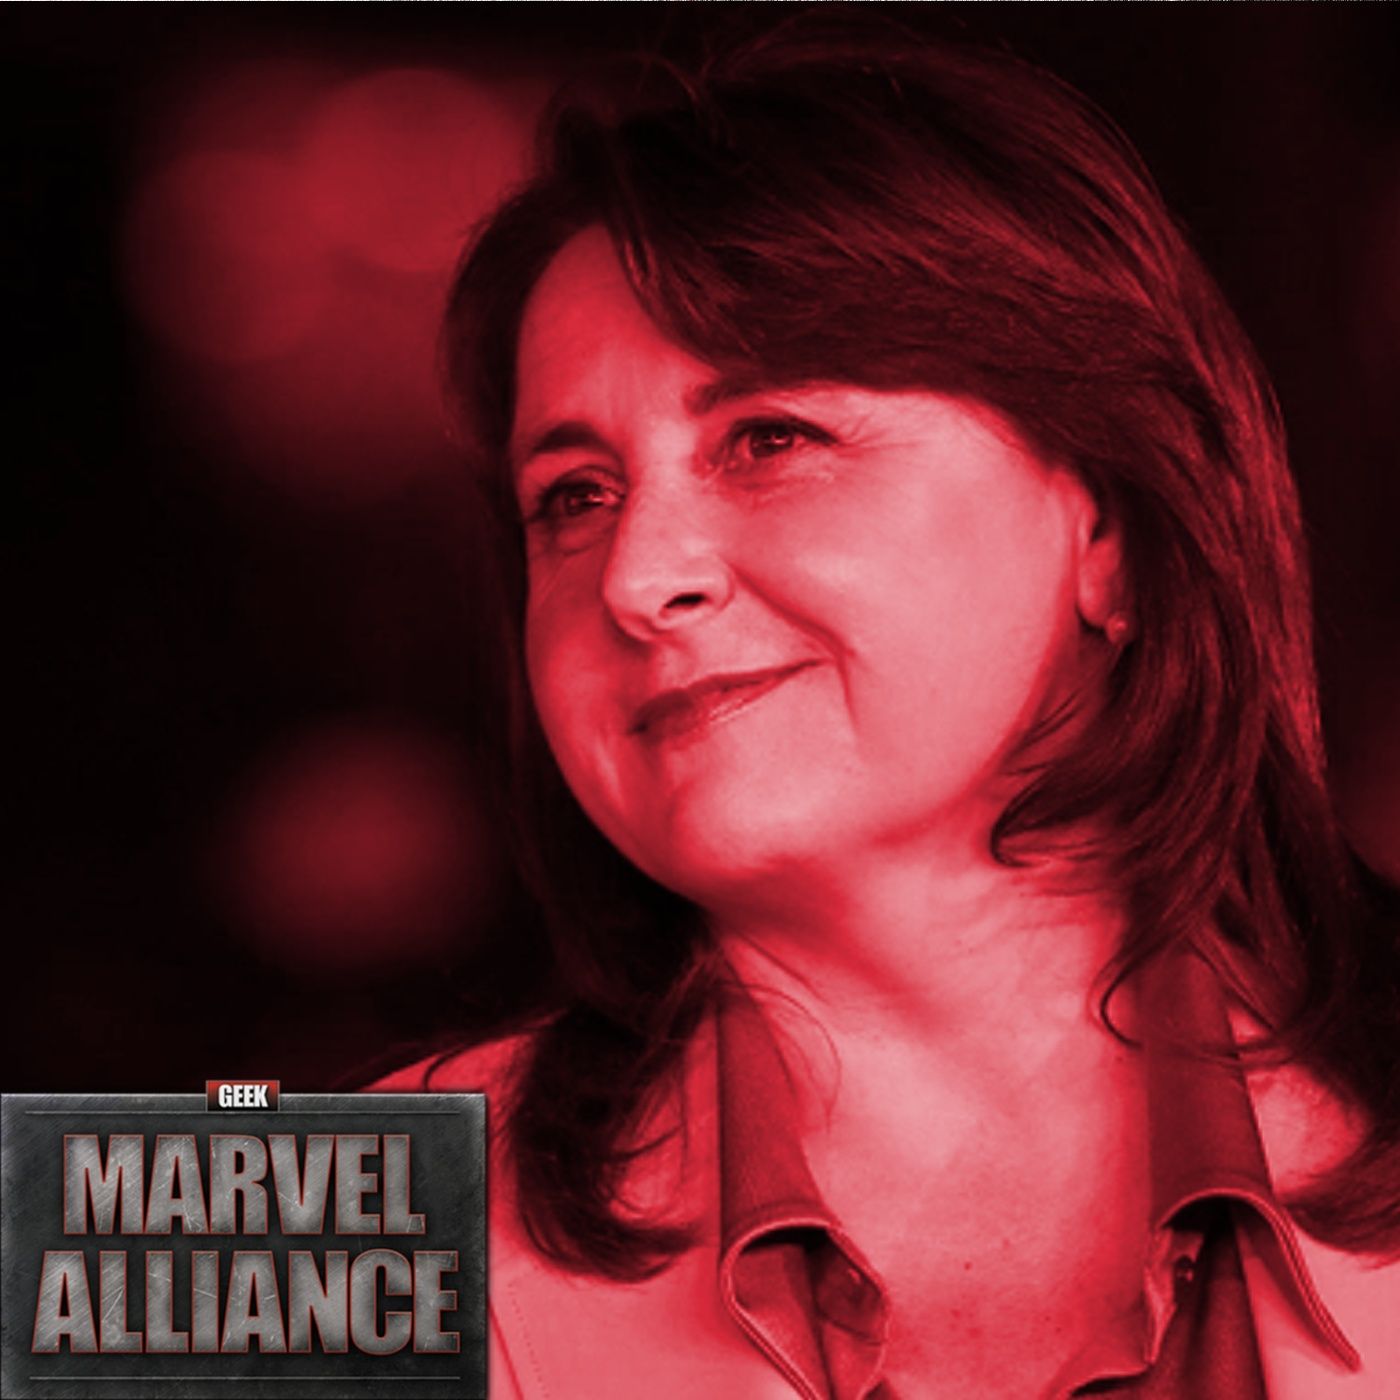 Marvel Studios Executive Victoria Alonso Exits : Marvel Alliance Vol. 156